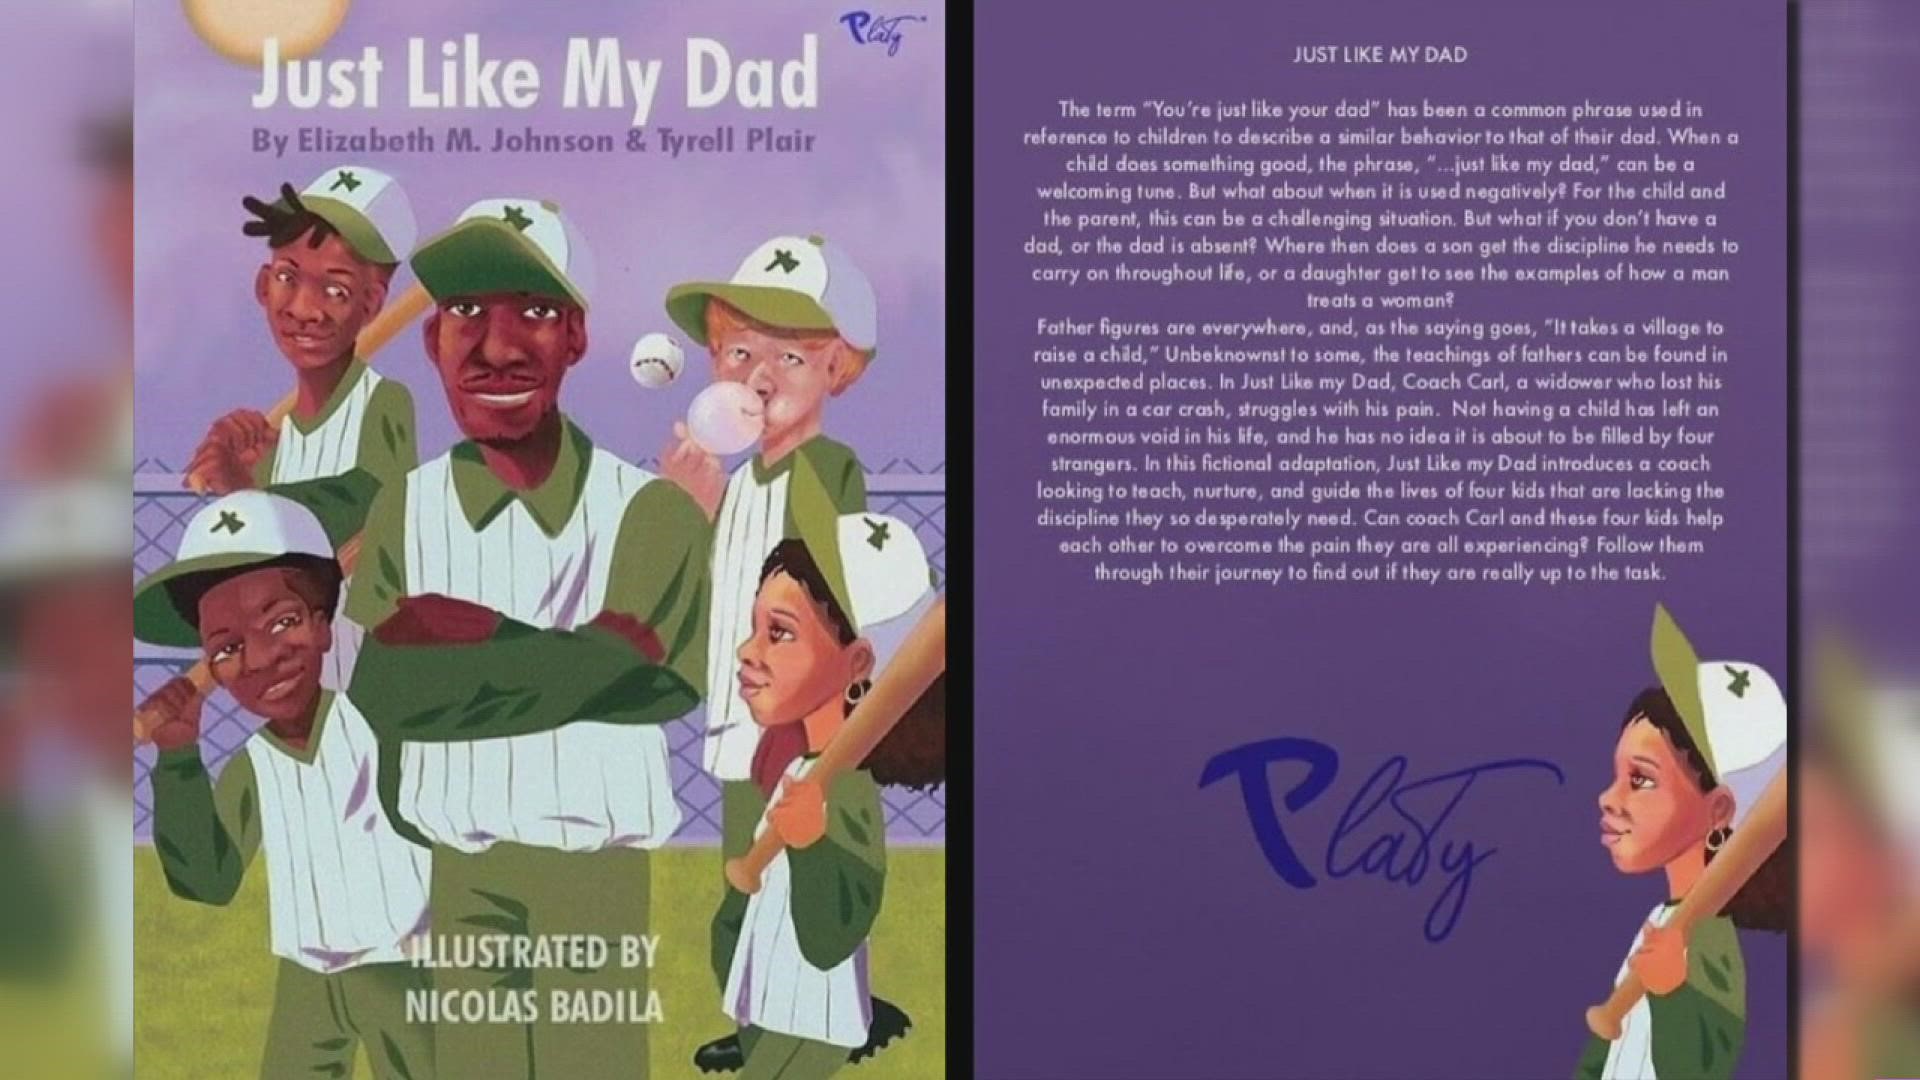 Authors Elizabeth Johnson & Tyrell Plair explain how their book can help children